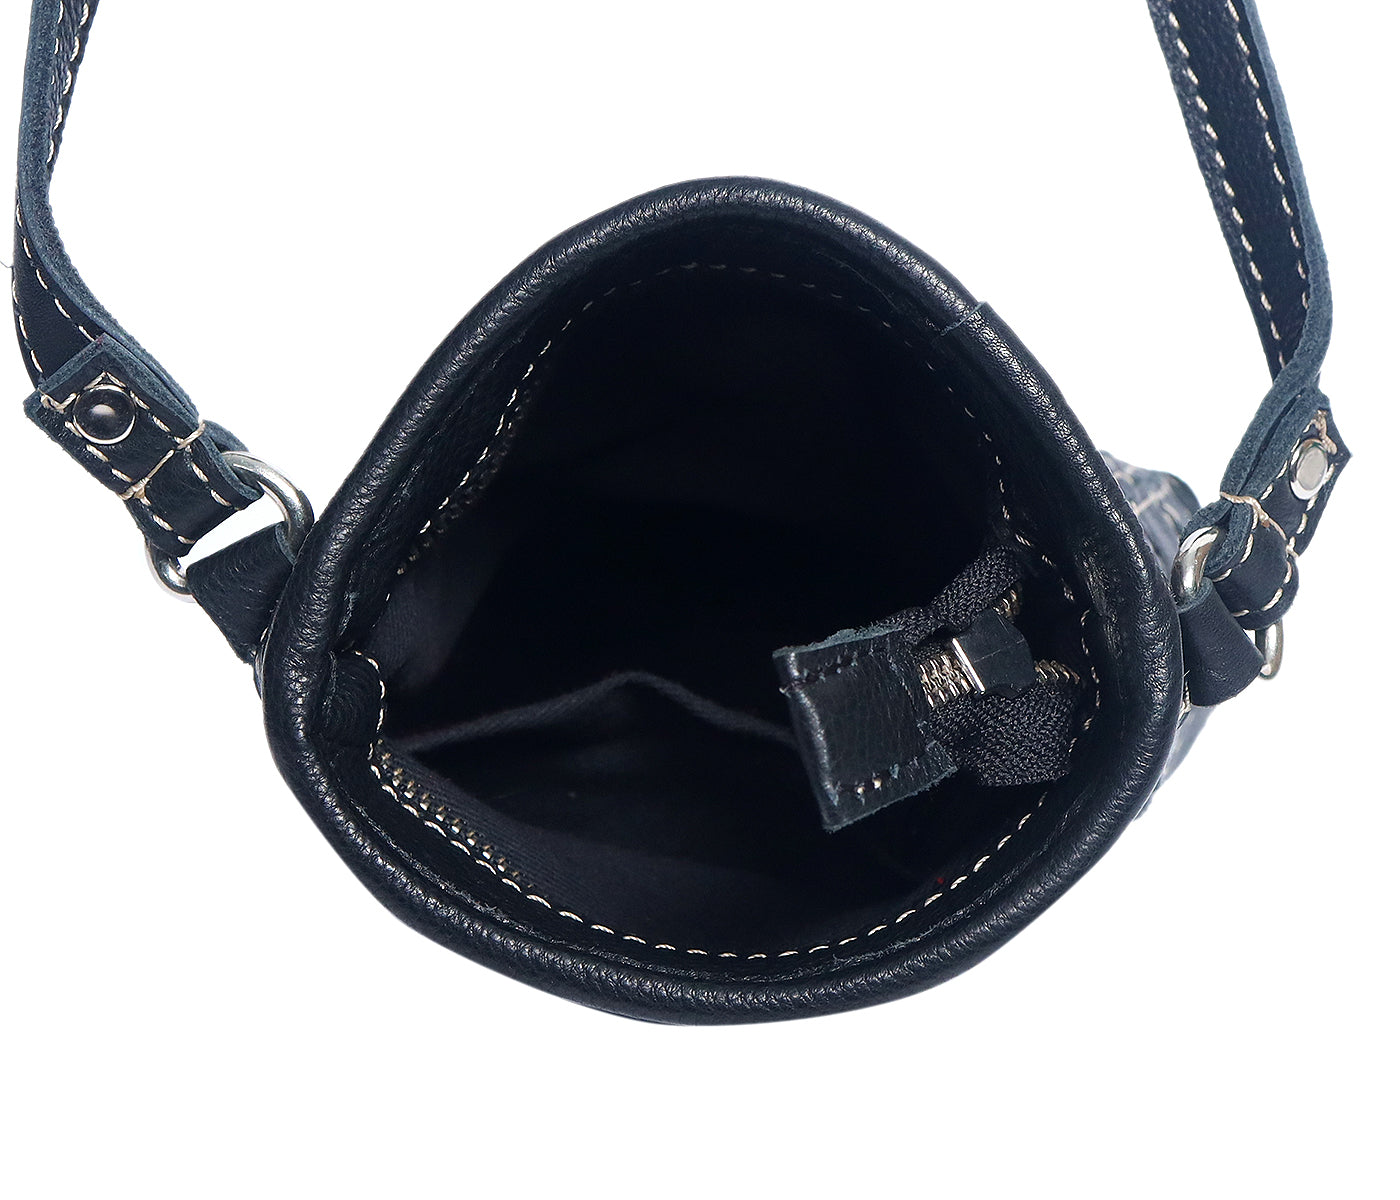 Elegance Redefined: Black Leather Sling Bag with White Stitching. - CELTICINDIA